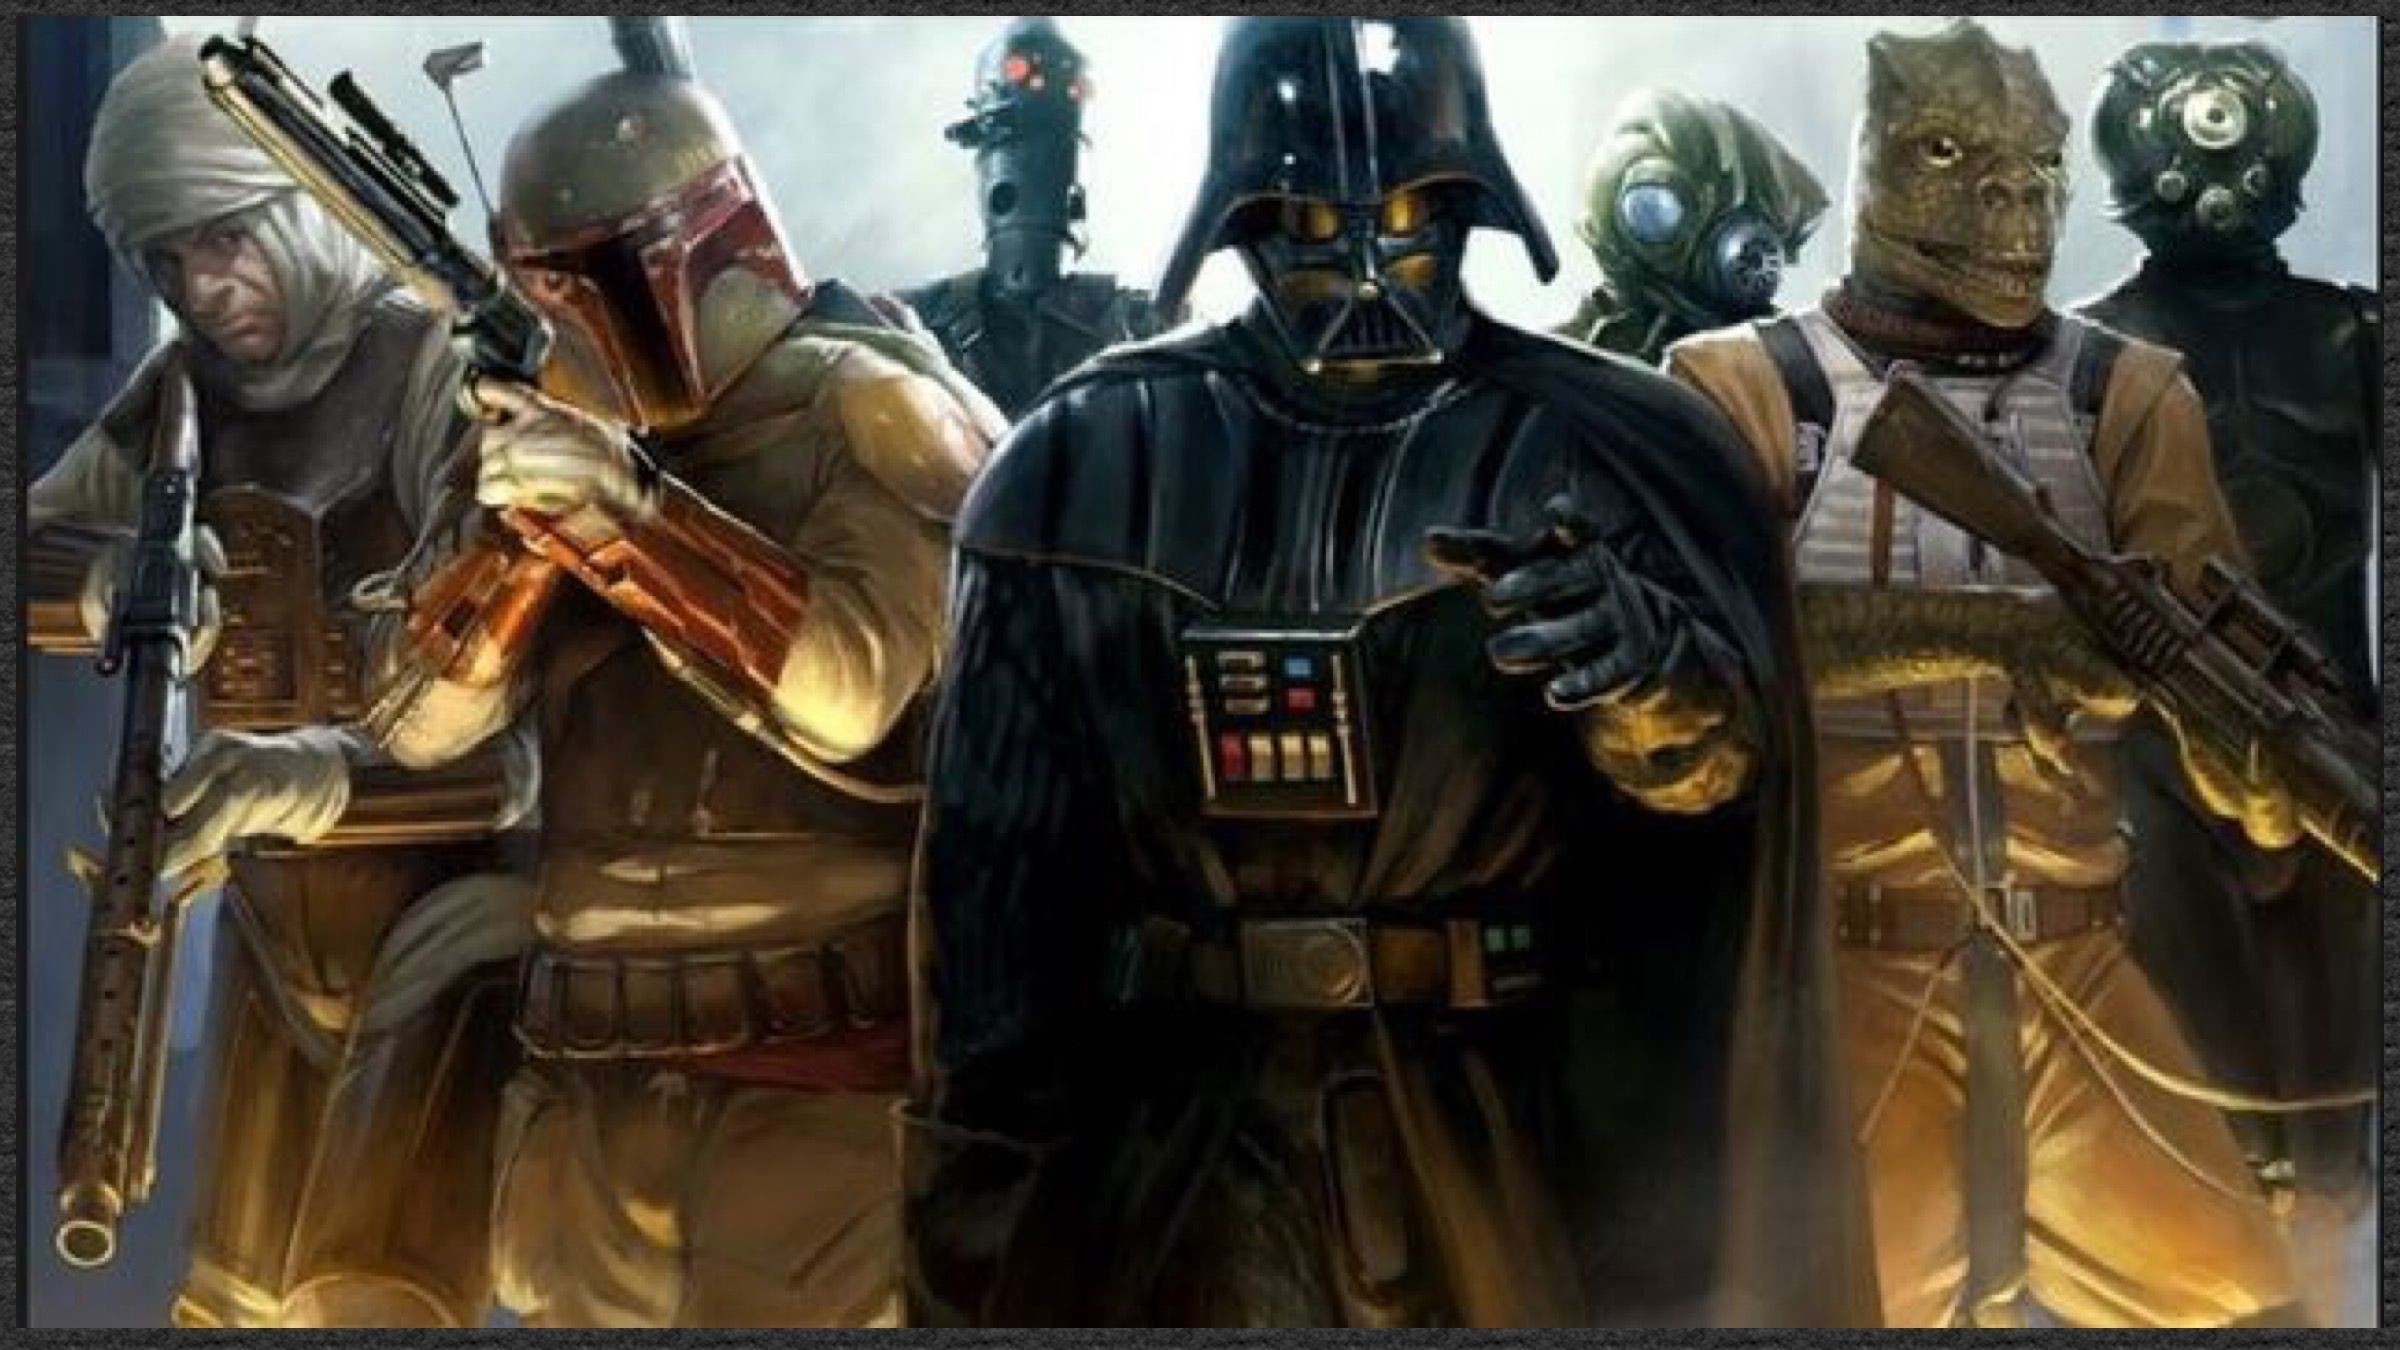 2400x1350 Star Wars Darth Vader and The Bounty Hunters